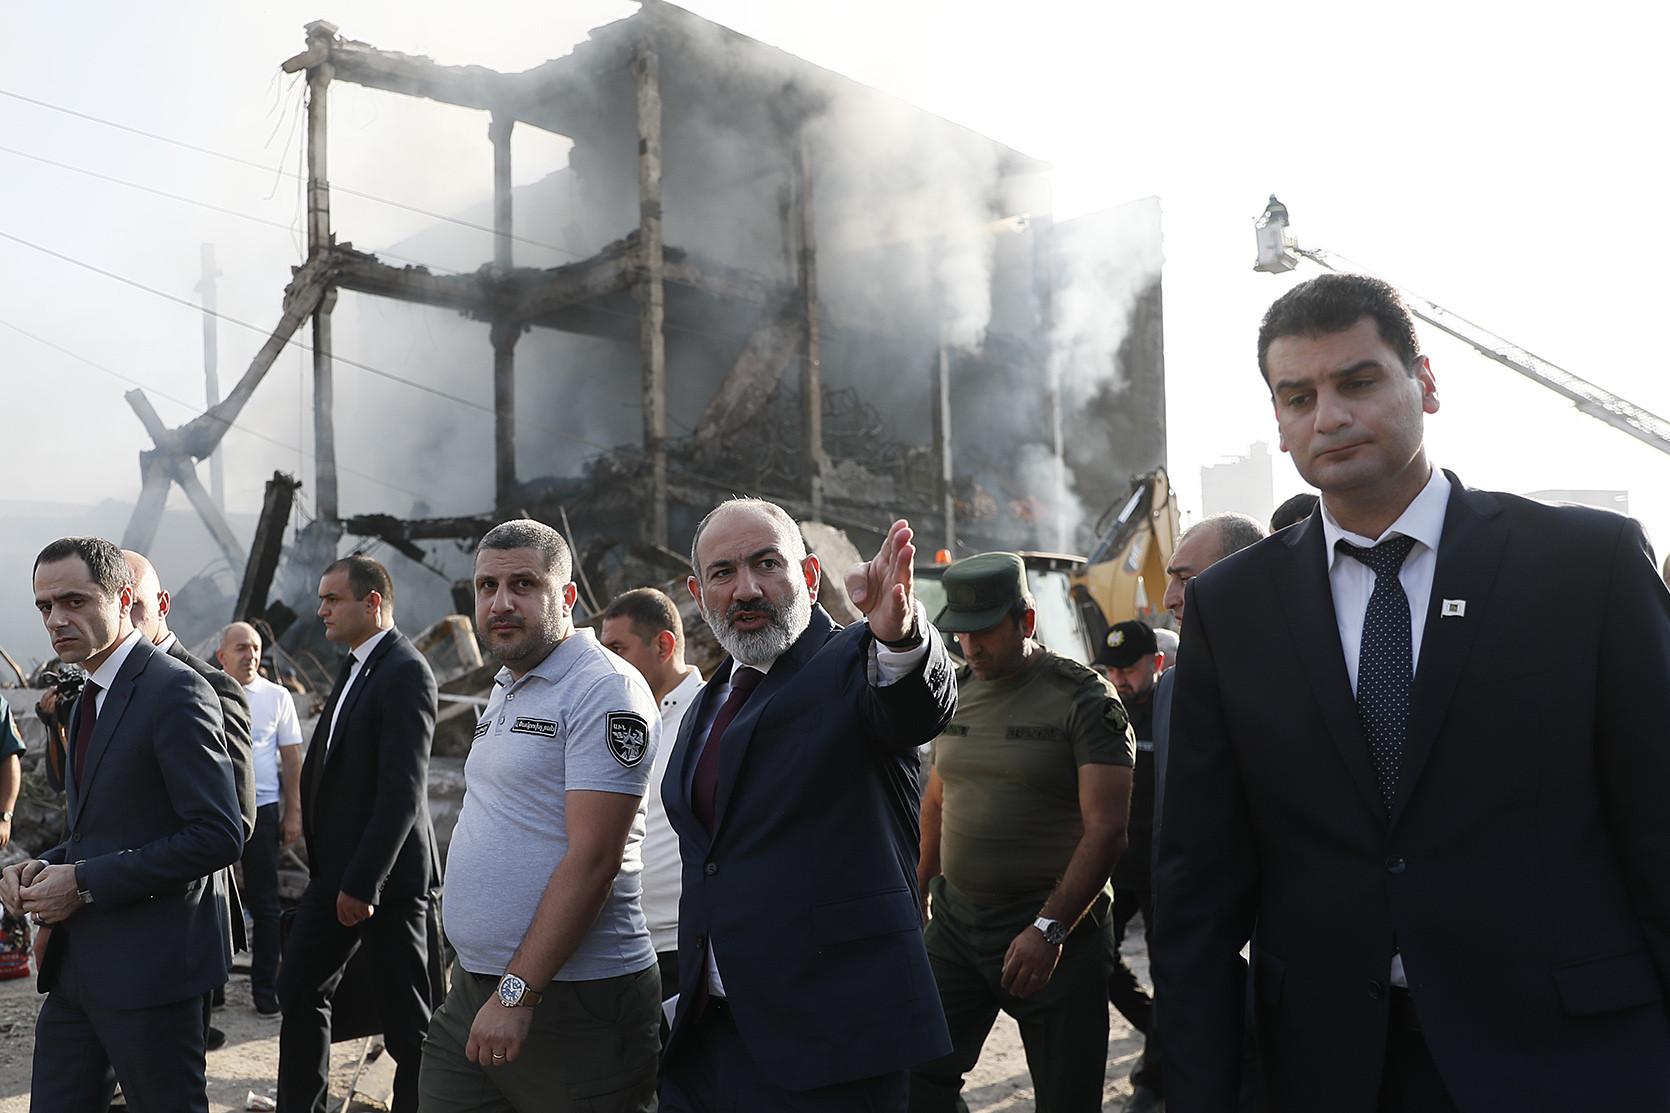 Pashinyan Tours Yerevan Blast Site